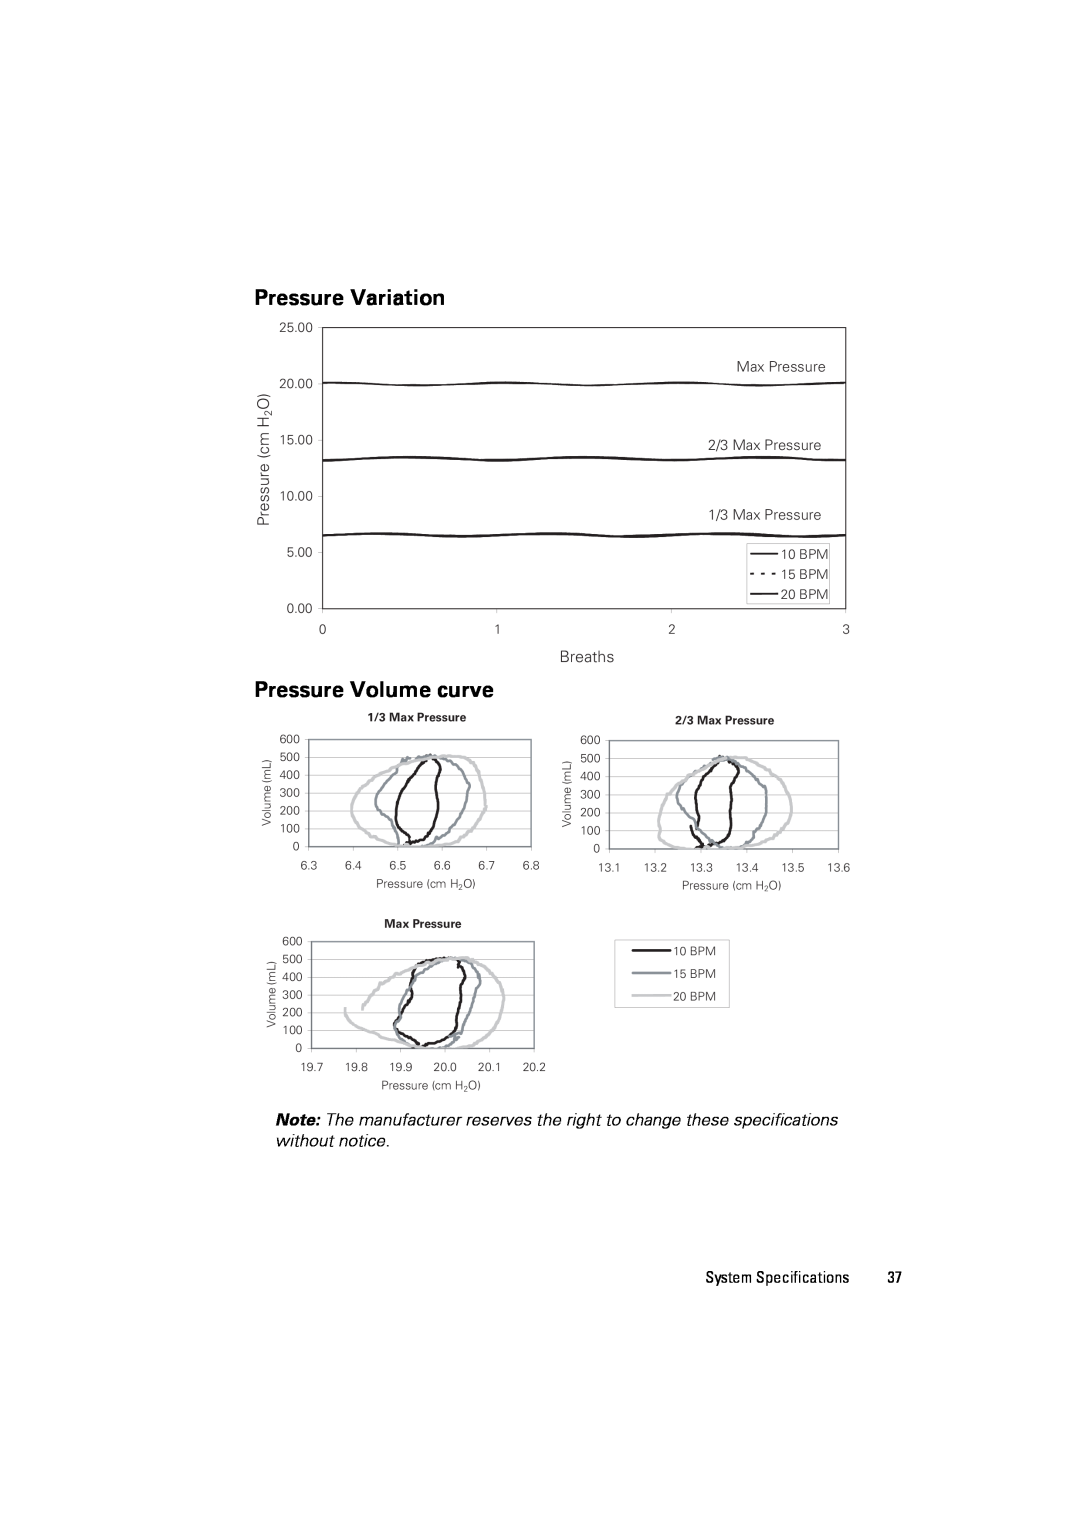 ResMed III Pressure Variation, Pressure Volume curve, Pressure cm H2O, Breaths, 25.00, 10 BPM, 15 BPM, 20 BPM, 0.00 